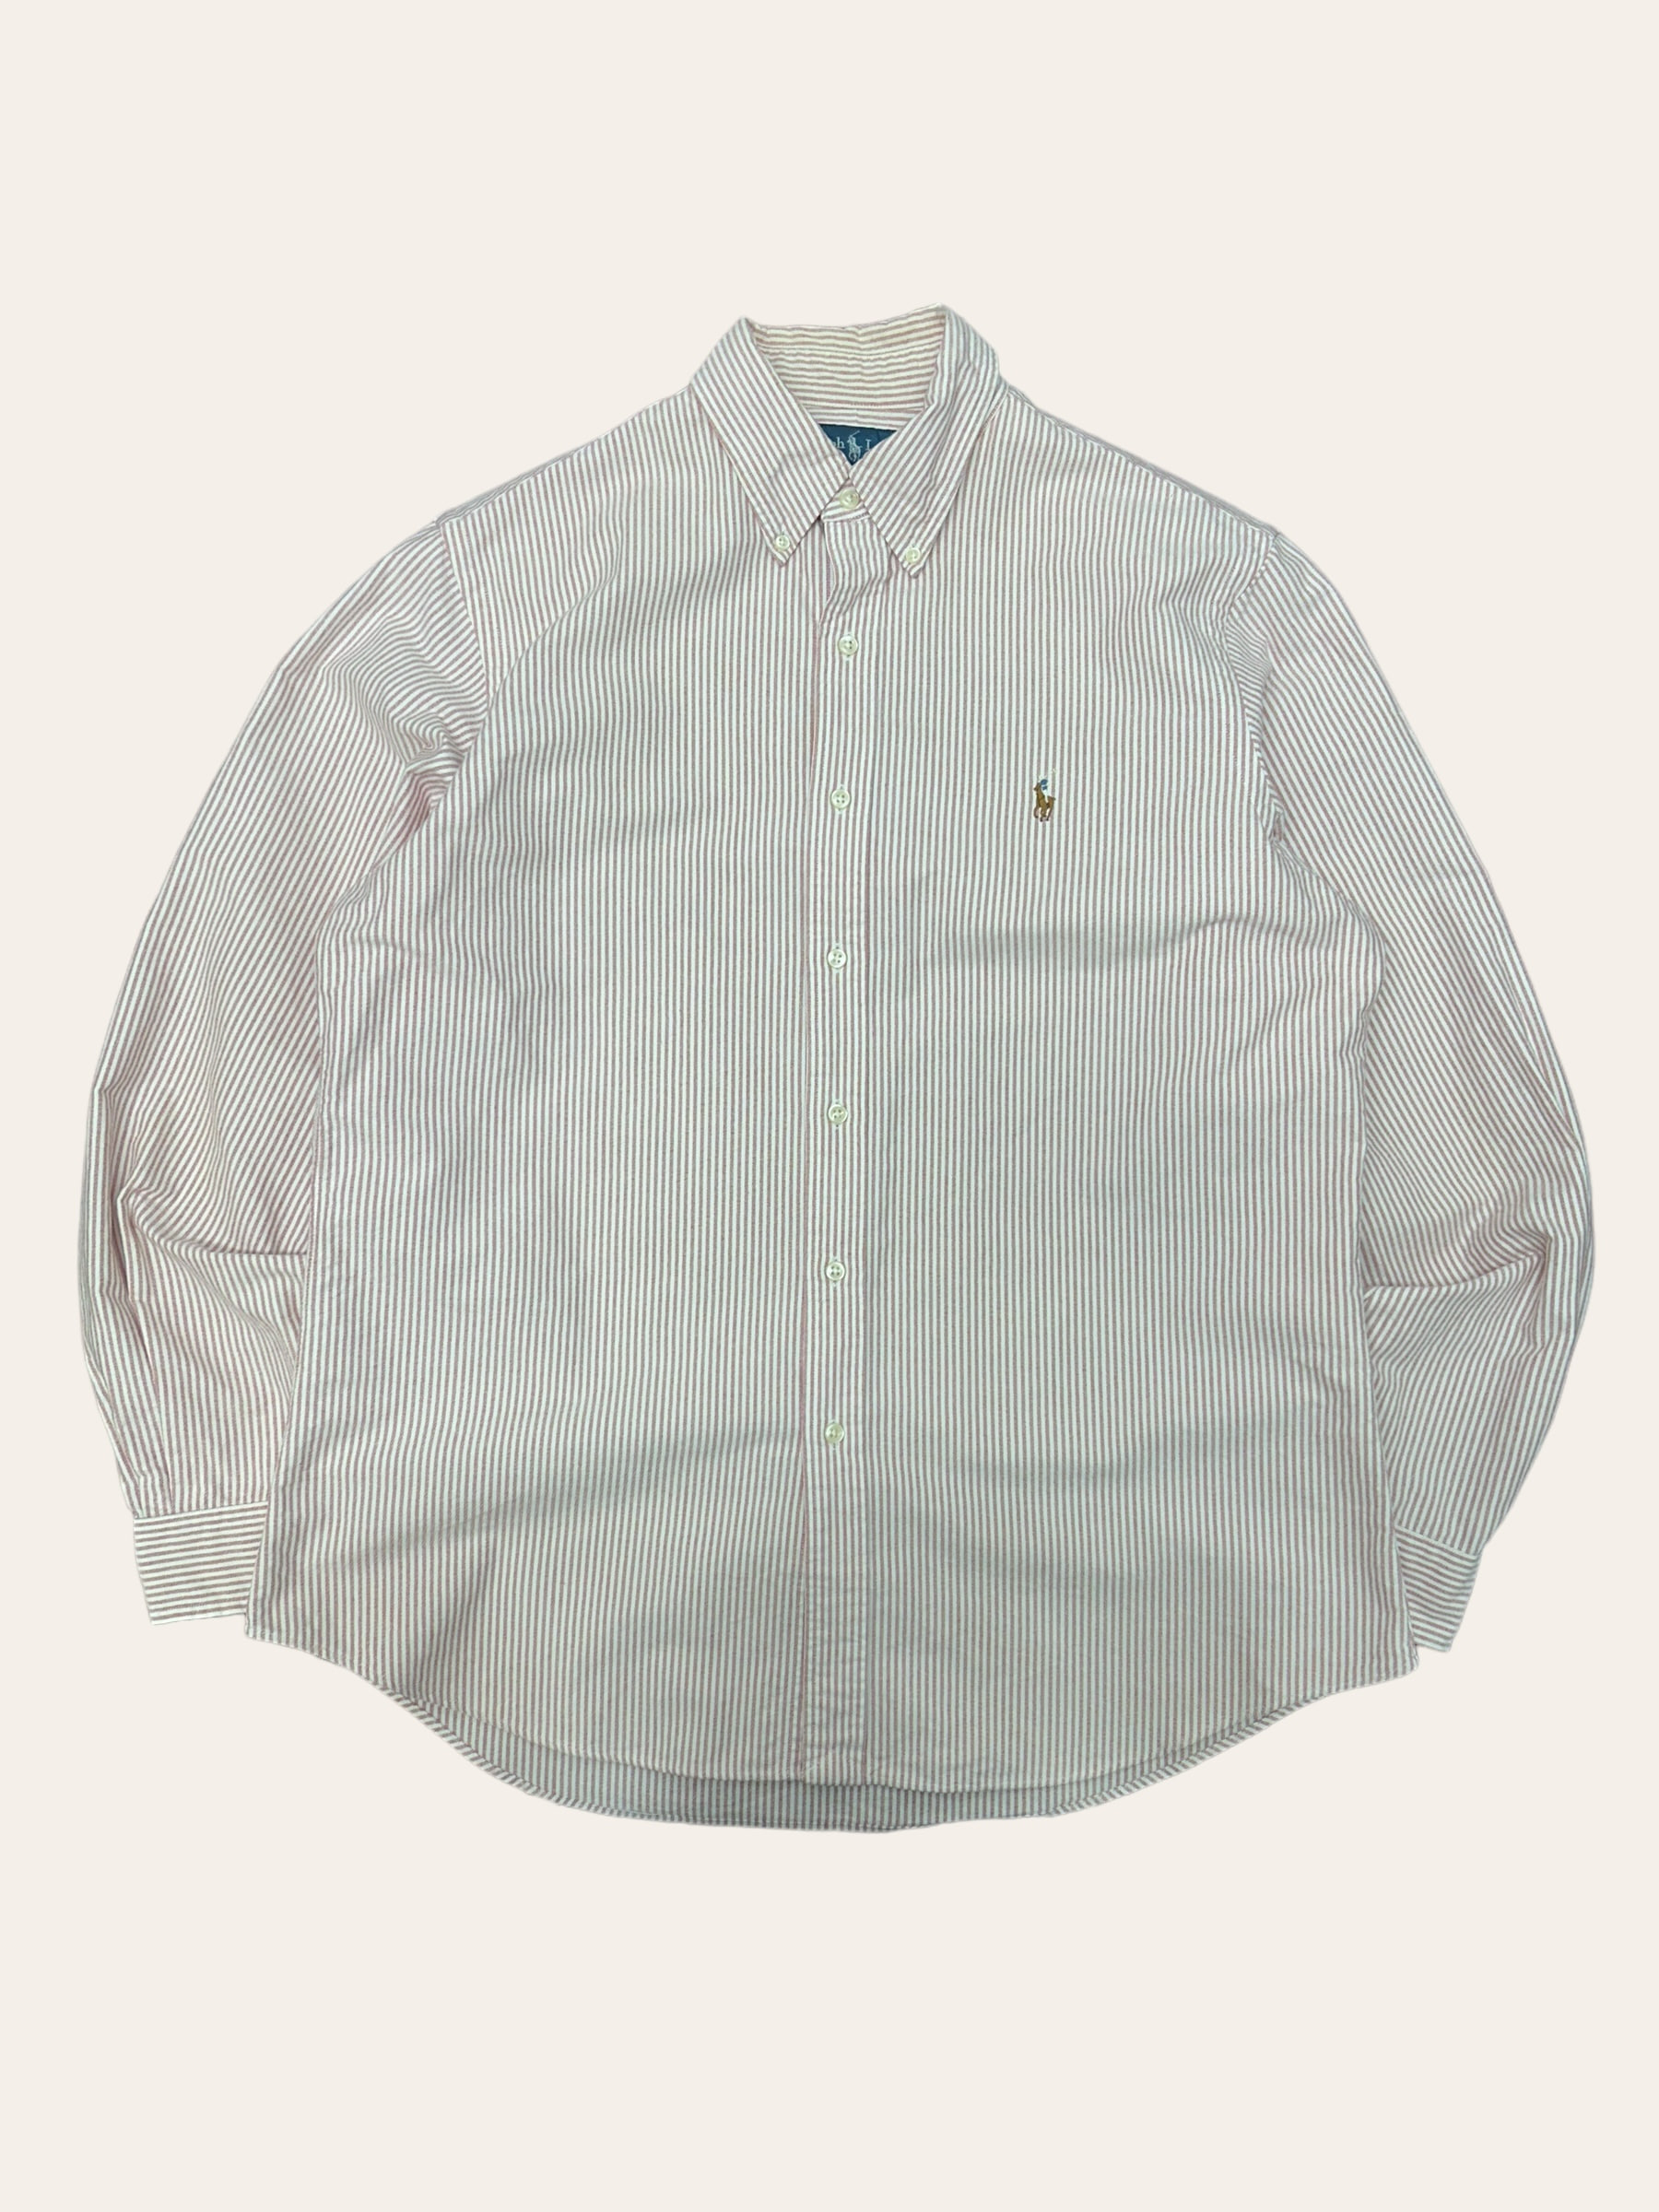 Polo ralph lauren pink color stripe oxford shirt L